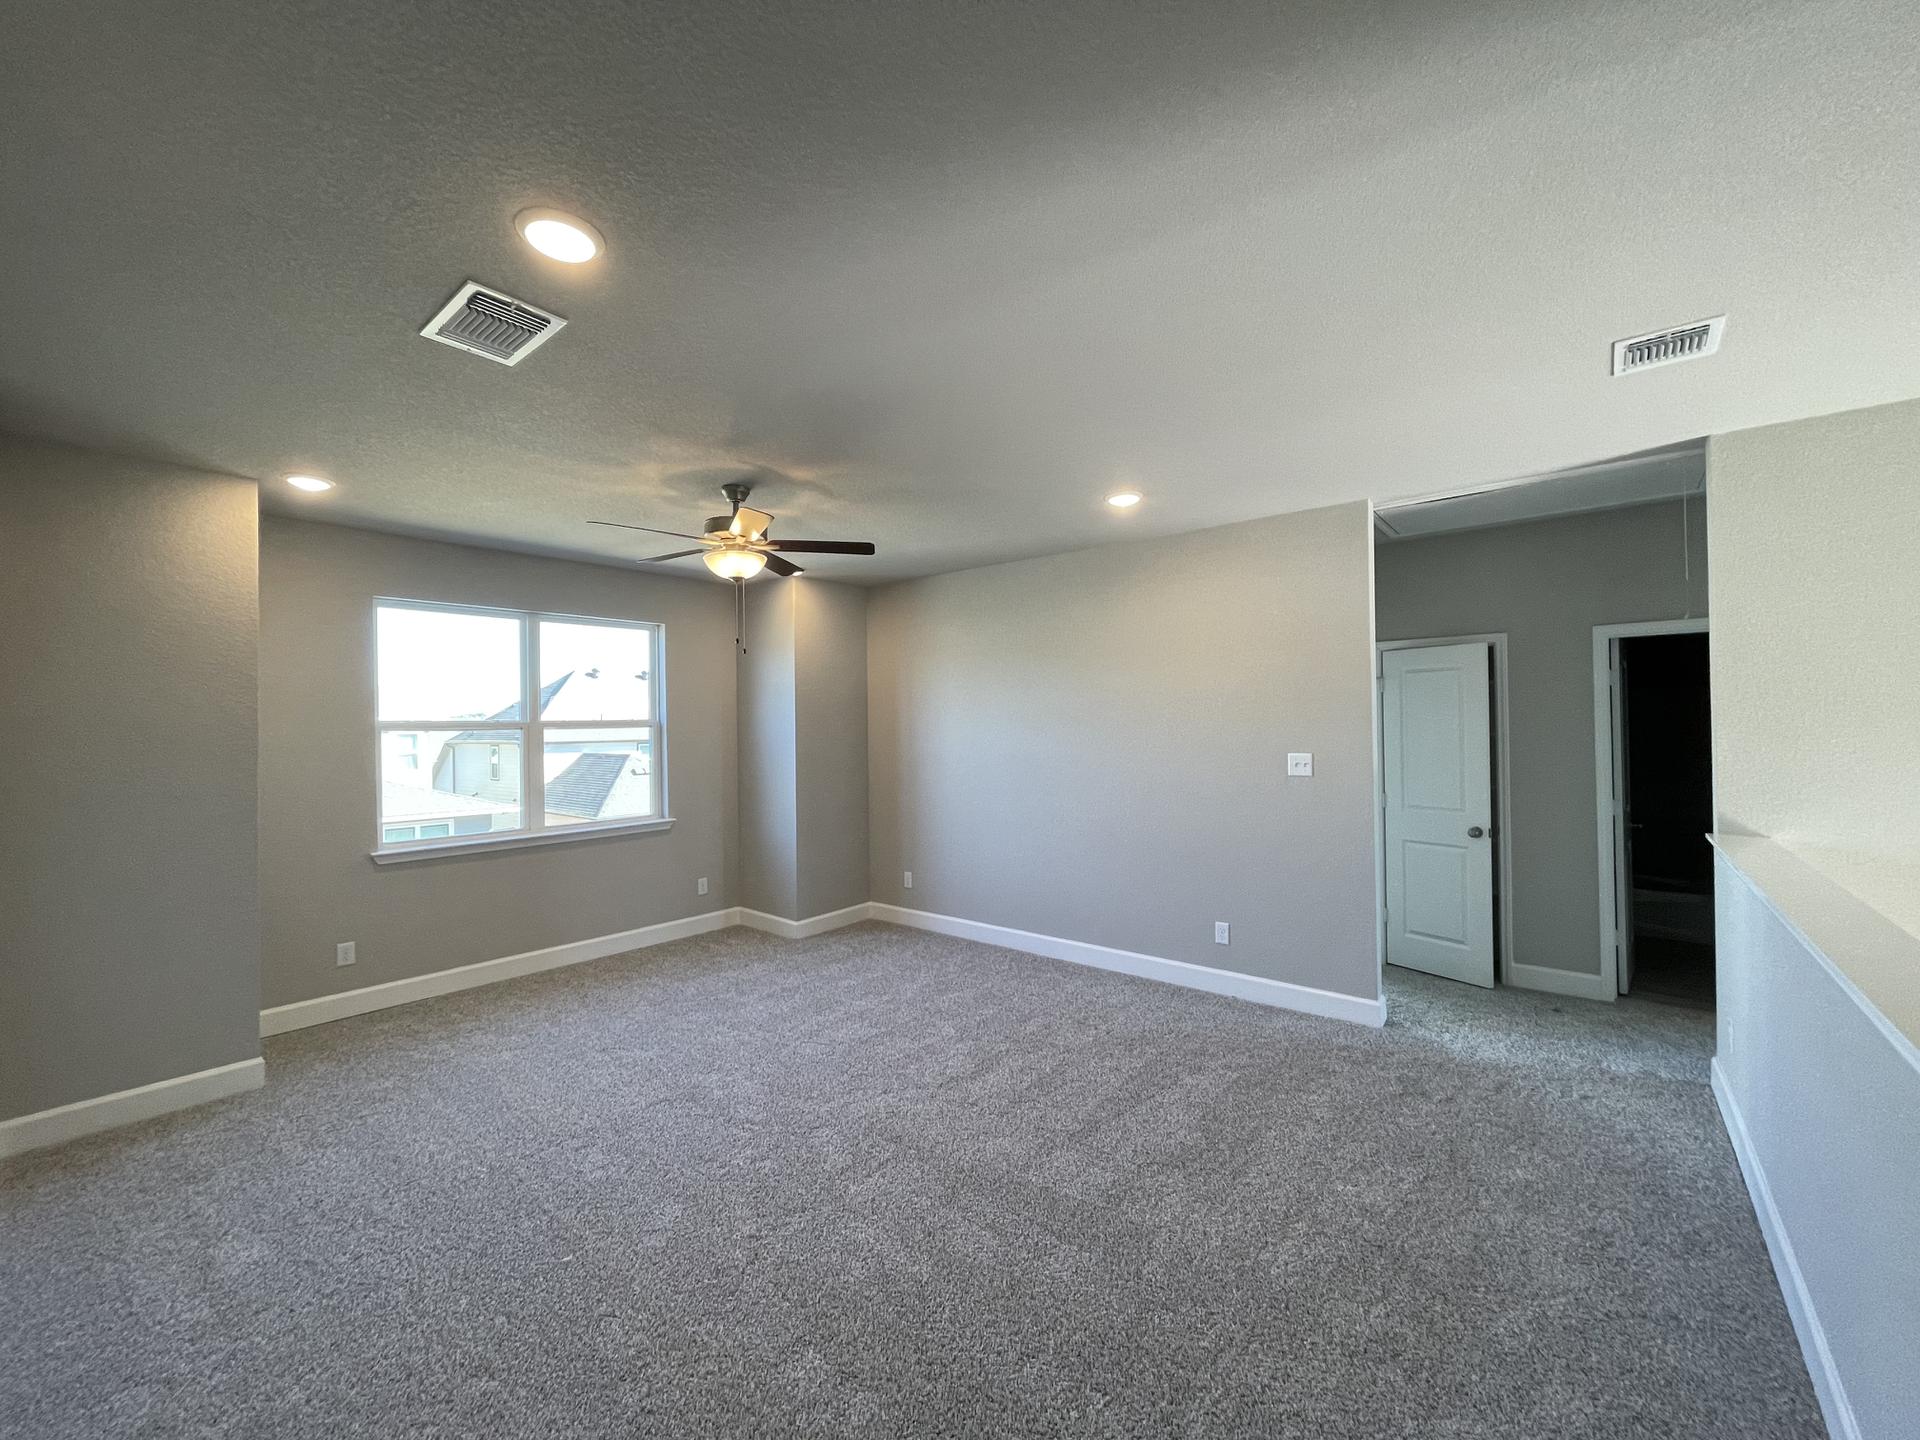 2,680sf New Home in Belton, TX